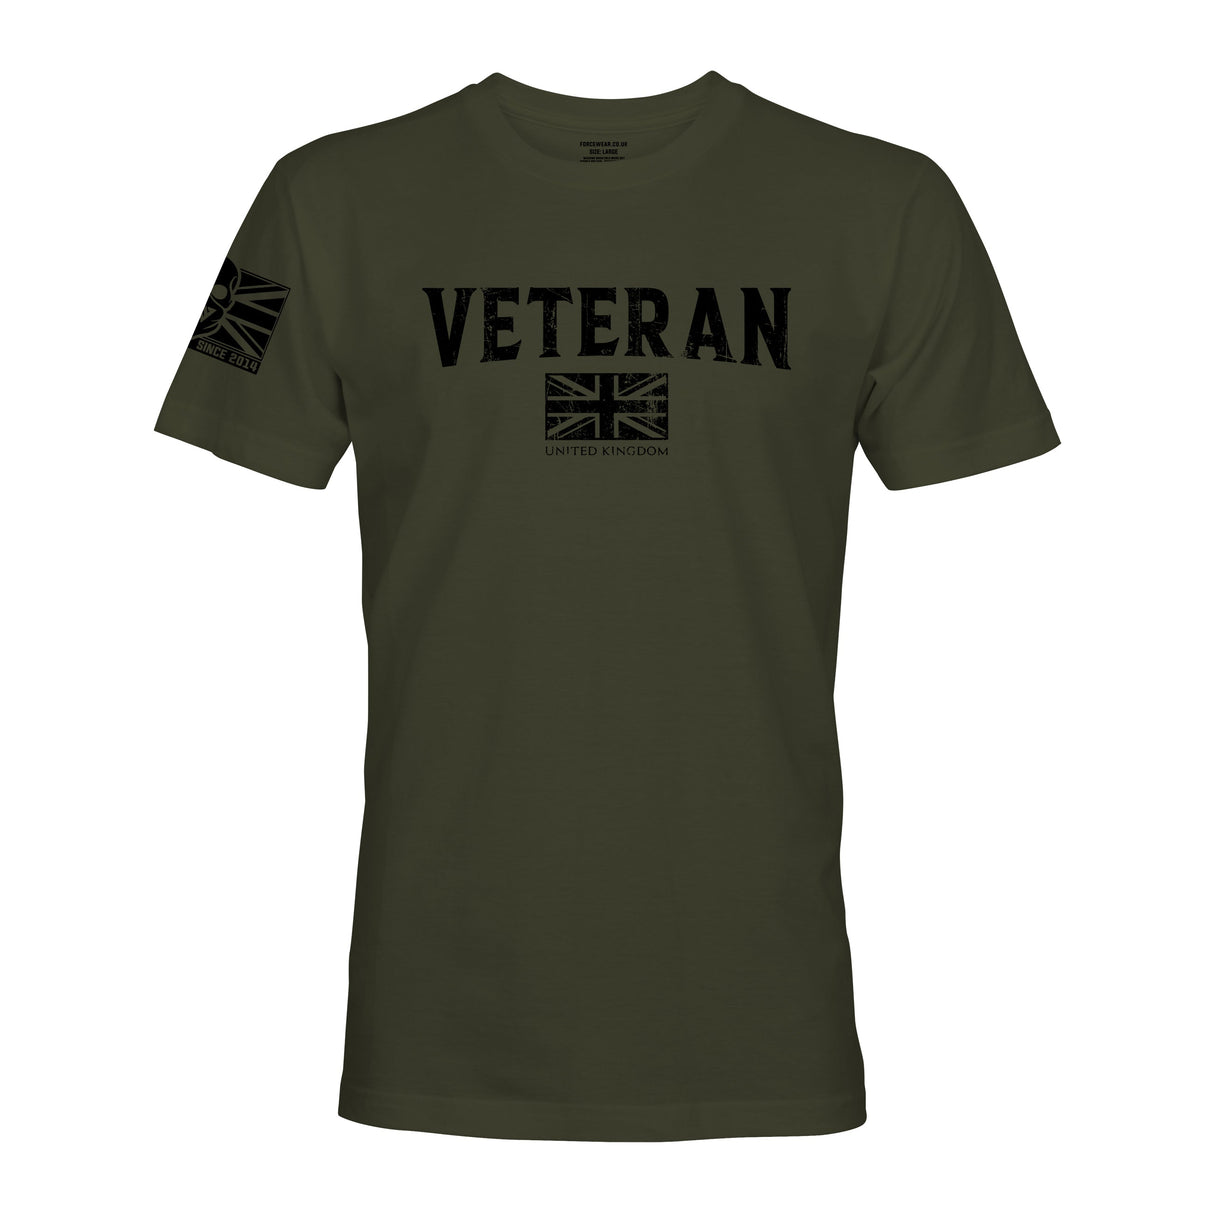 UK VETERAN - Force Wear HQ - T-SHIRTS